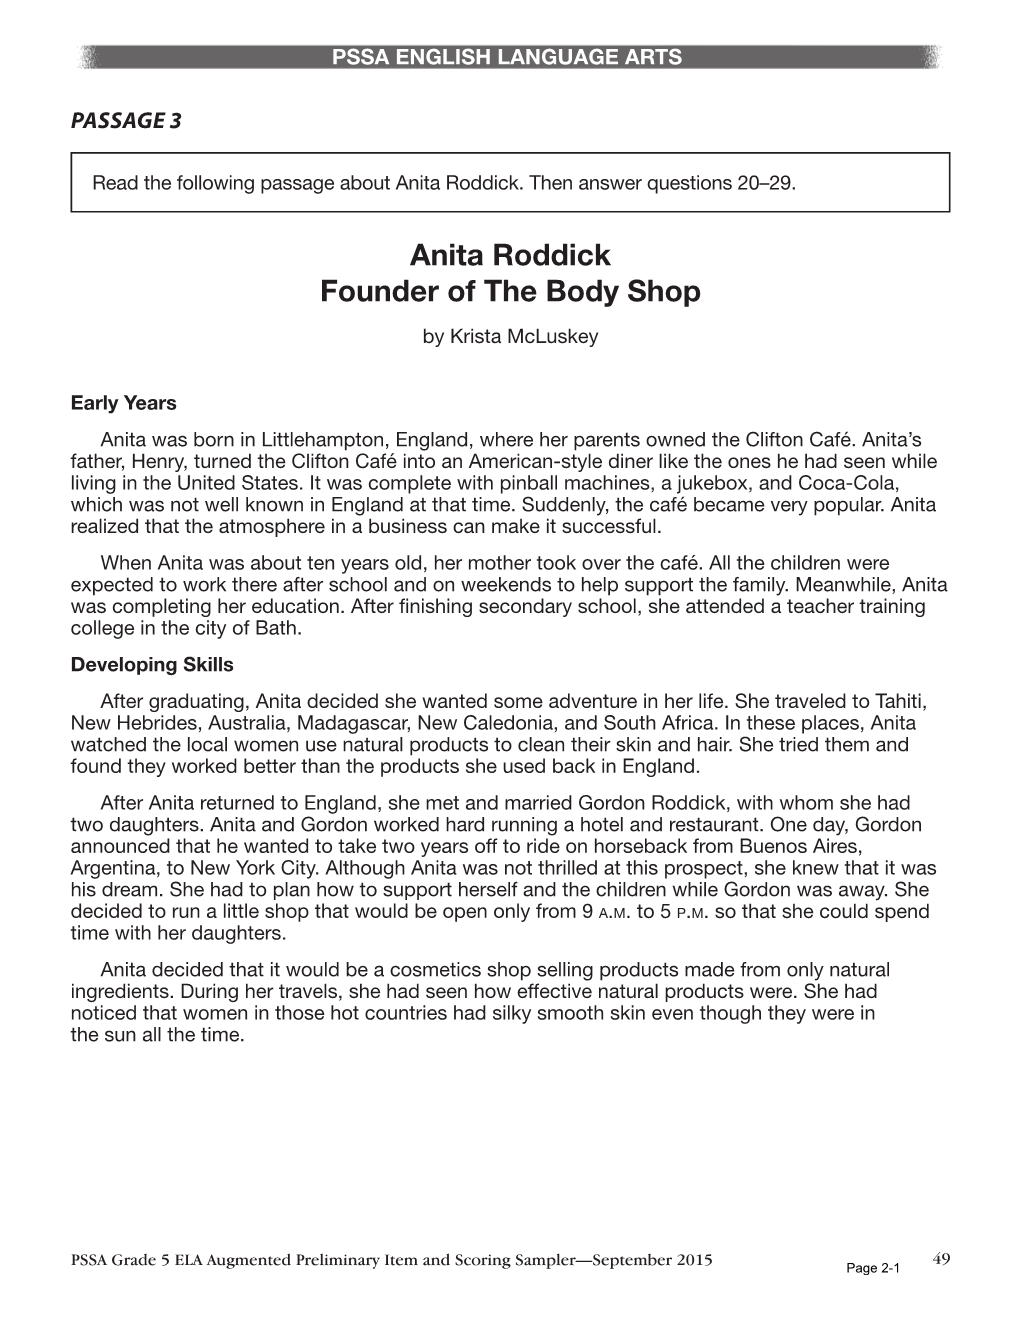 Anita Roddick Founder of the Body Shop by Krista Mcluskey